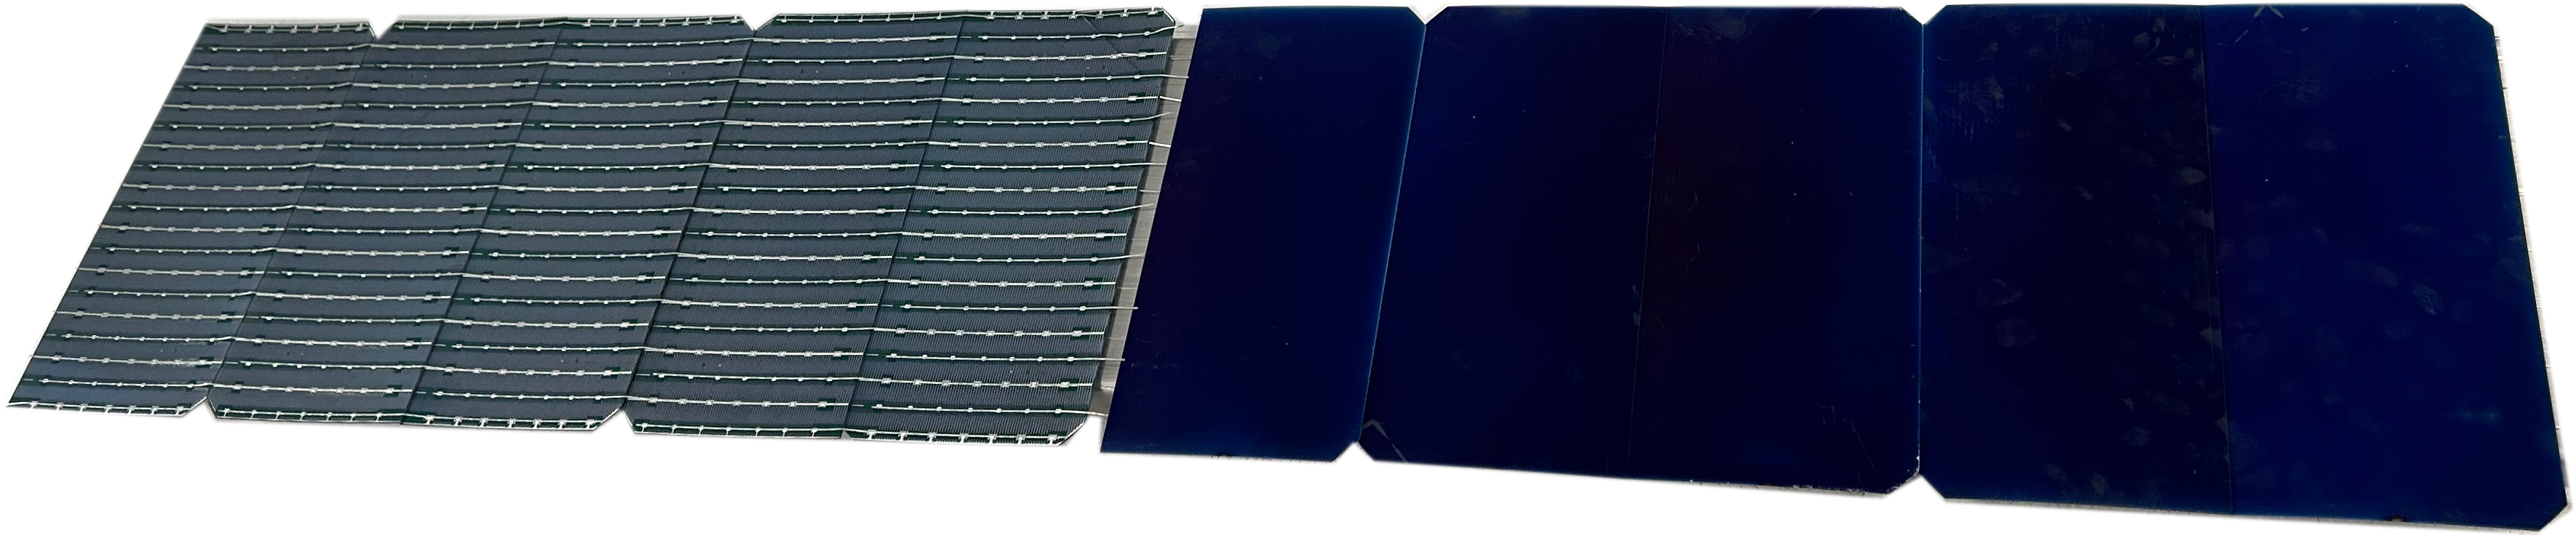 BC solar cell stringer Front side and back side.jpg